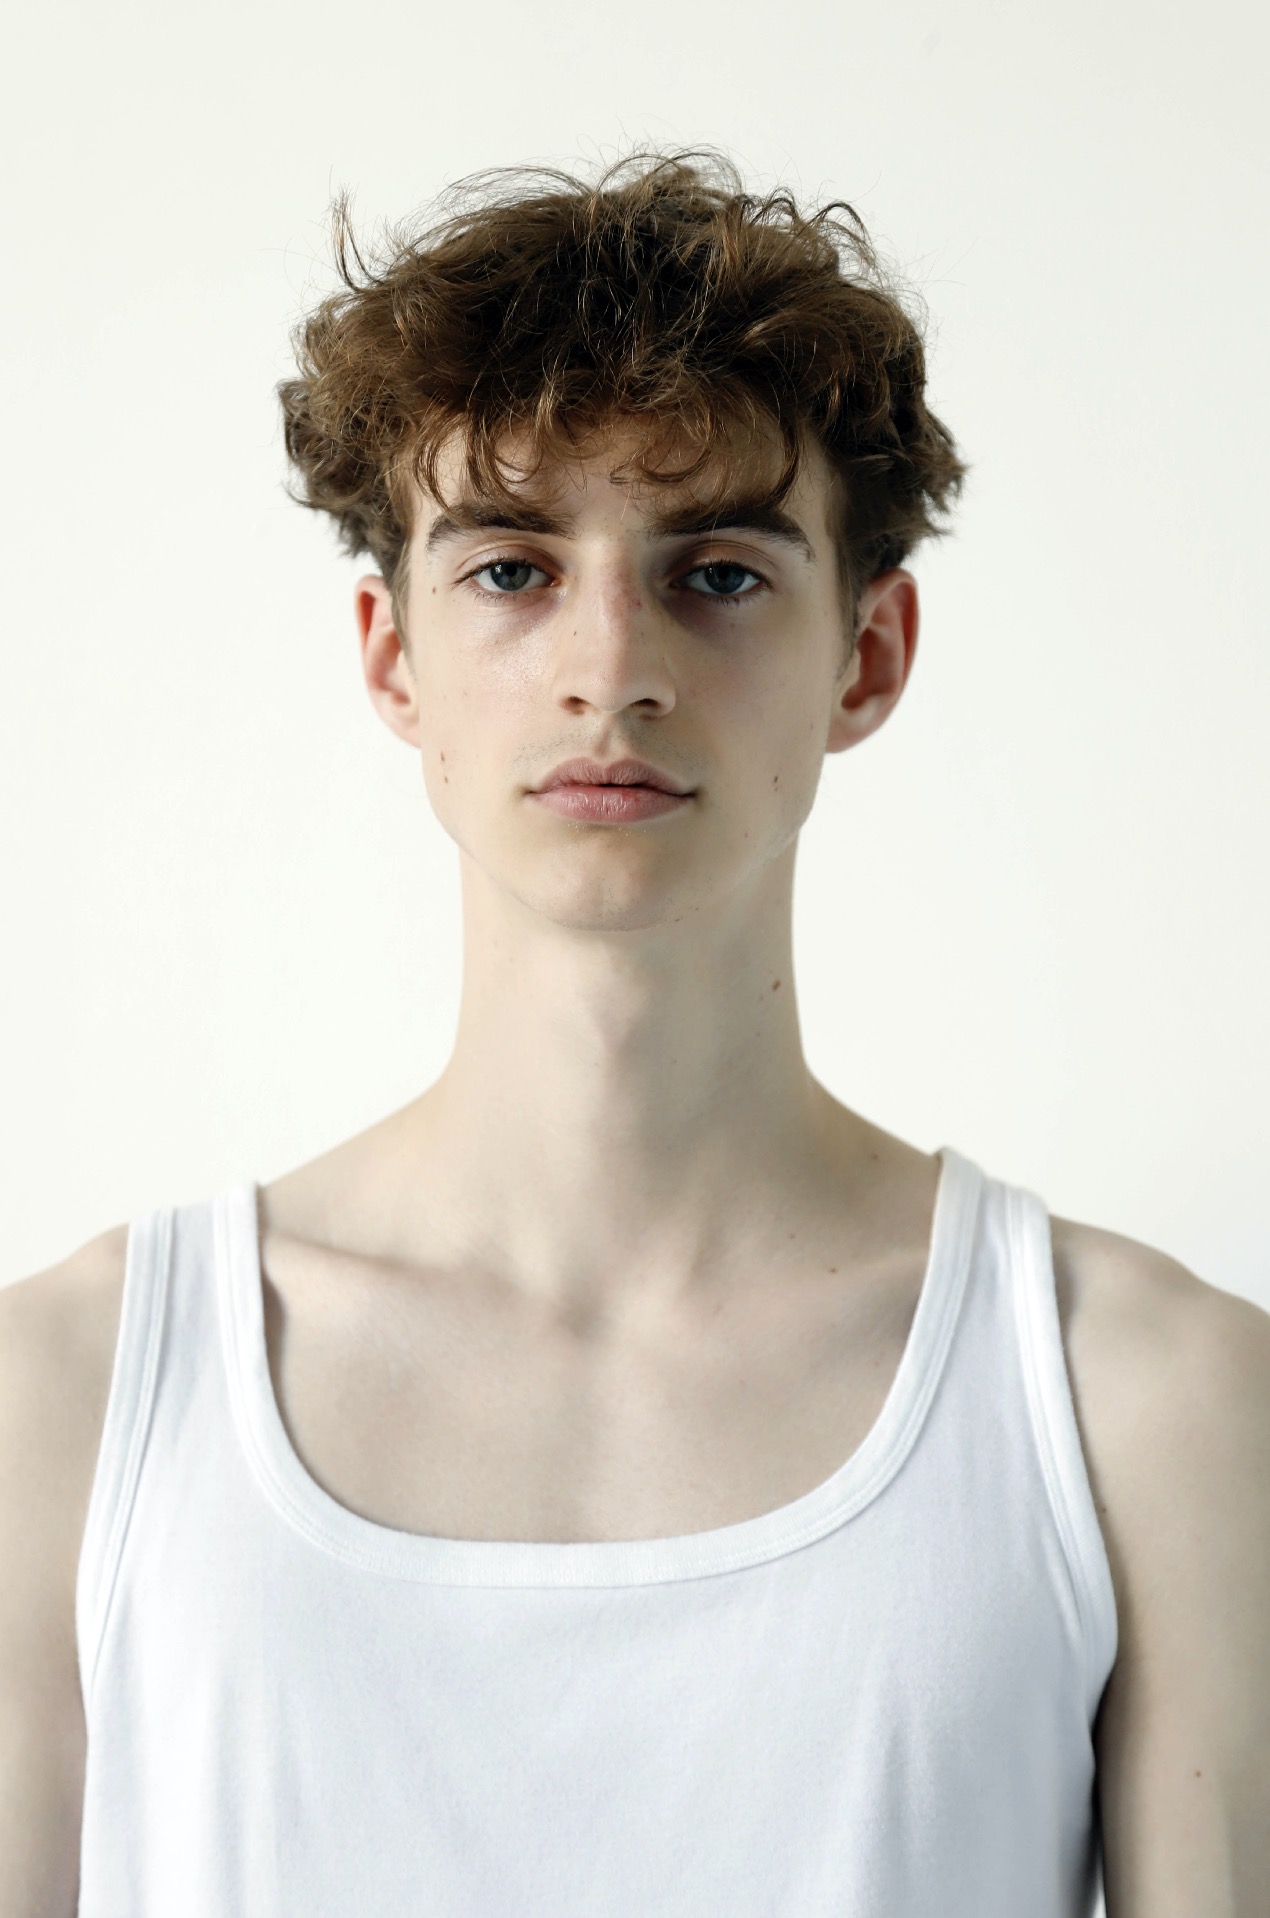 Antoine Gouffaux – True Models